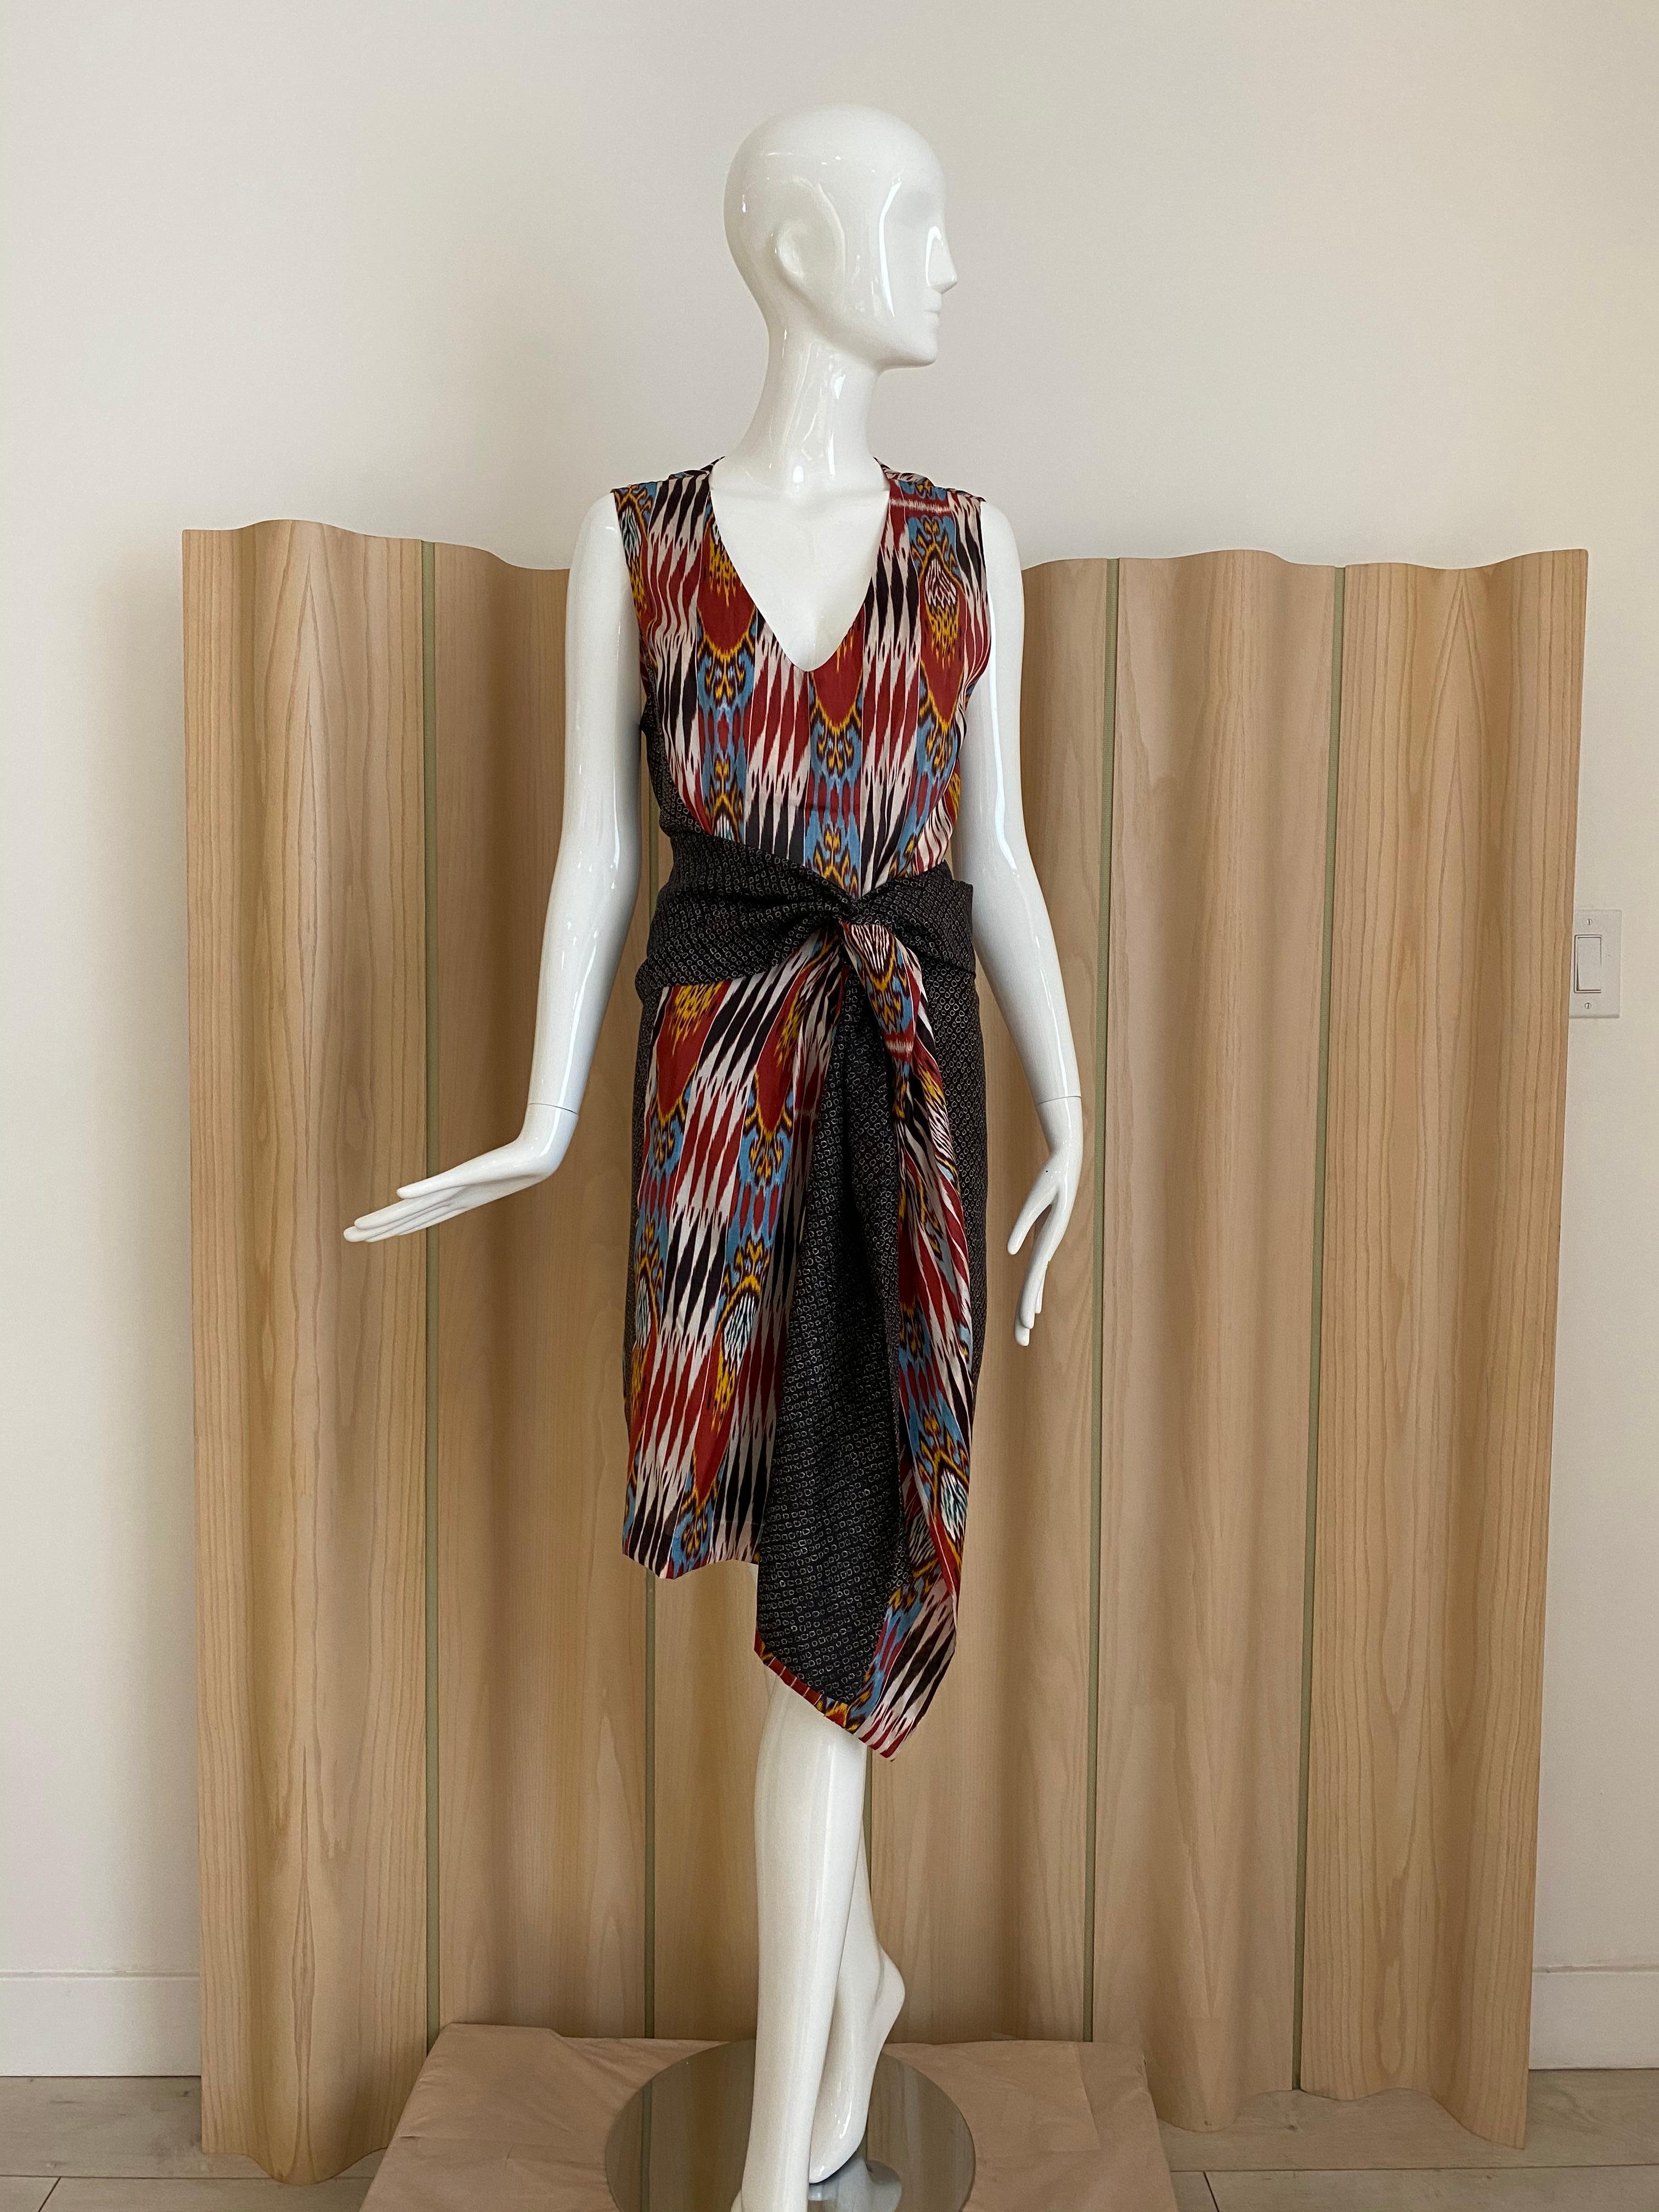 Dries Van Noten Ikat print sleeveless Silk Dress in maroon, blue, white, and orange.
Marked: 42 . 
Bust: 42” / Hip: 42”